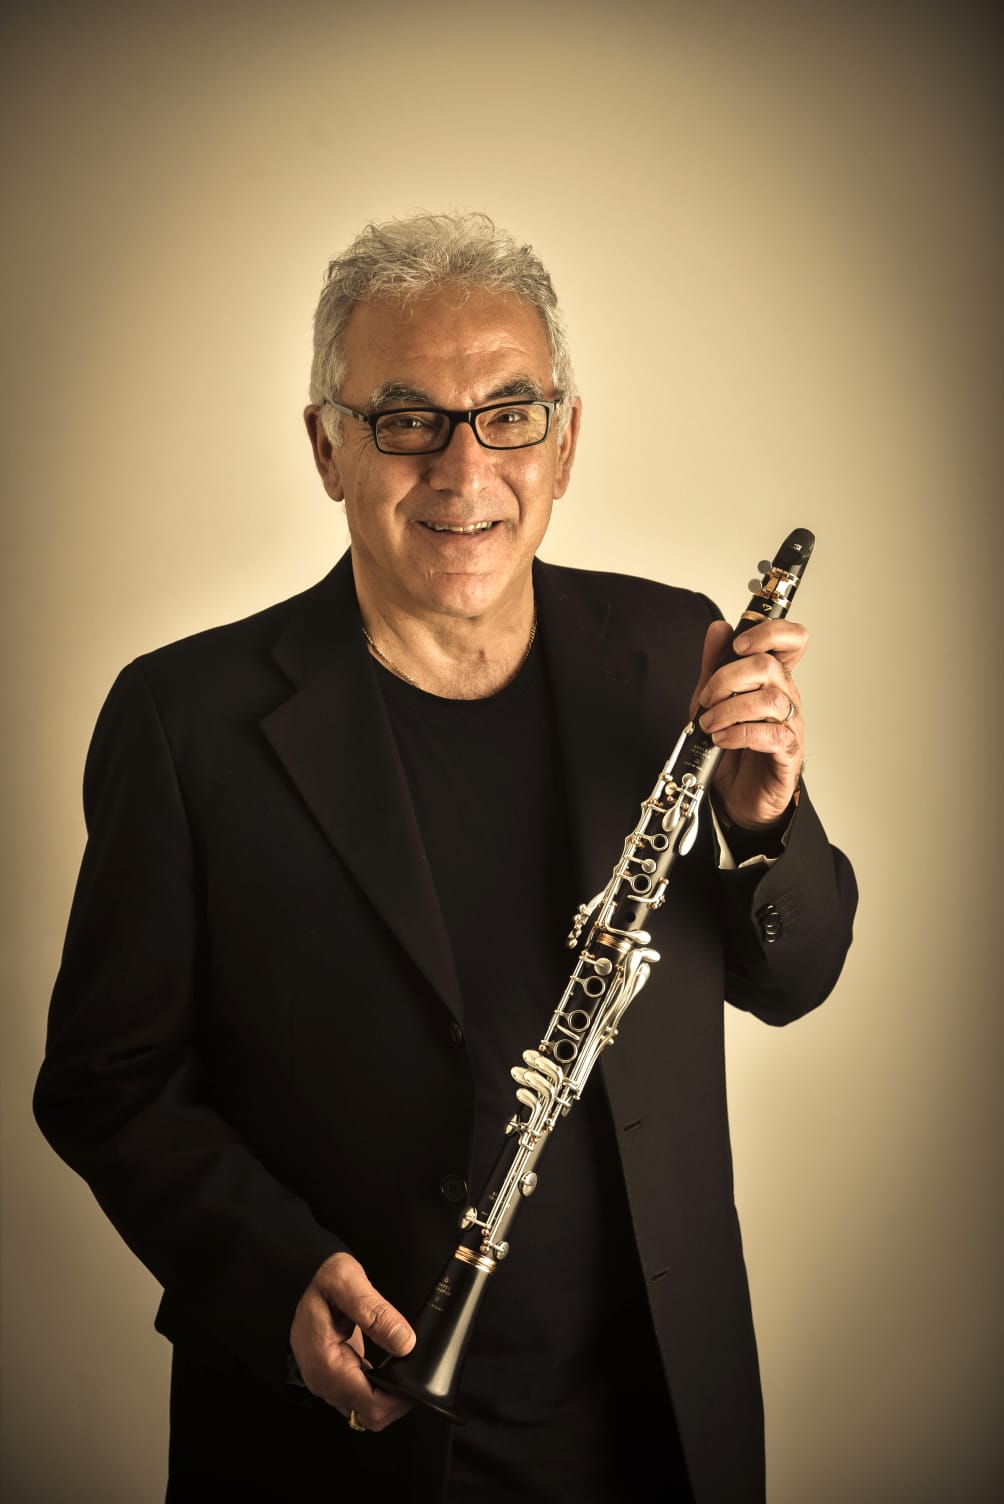 Tour musicale per il maestro Fabio Battistelli, noto clarinettista tifernate - Umbria Notizie Web